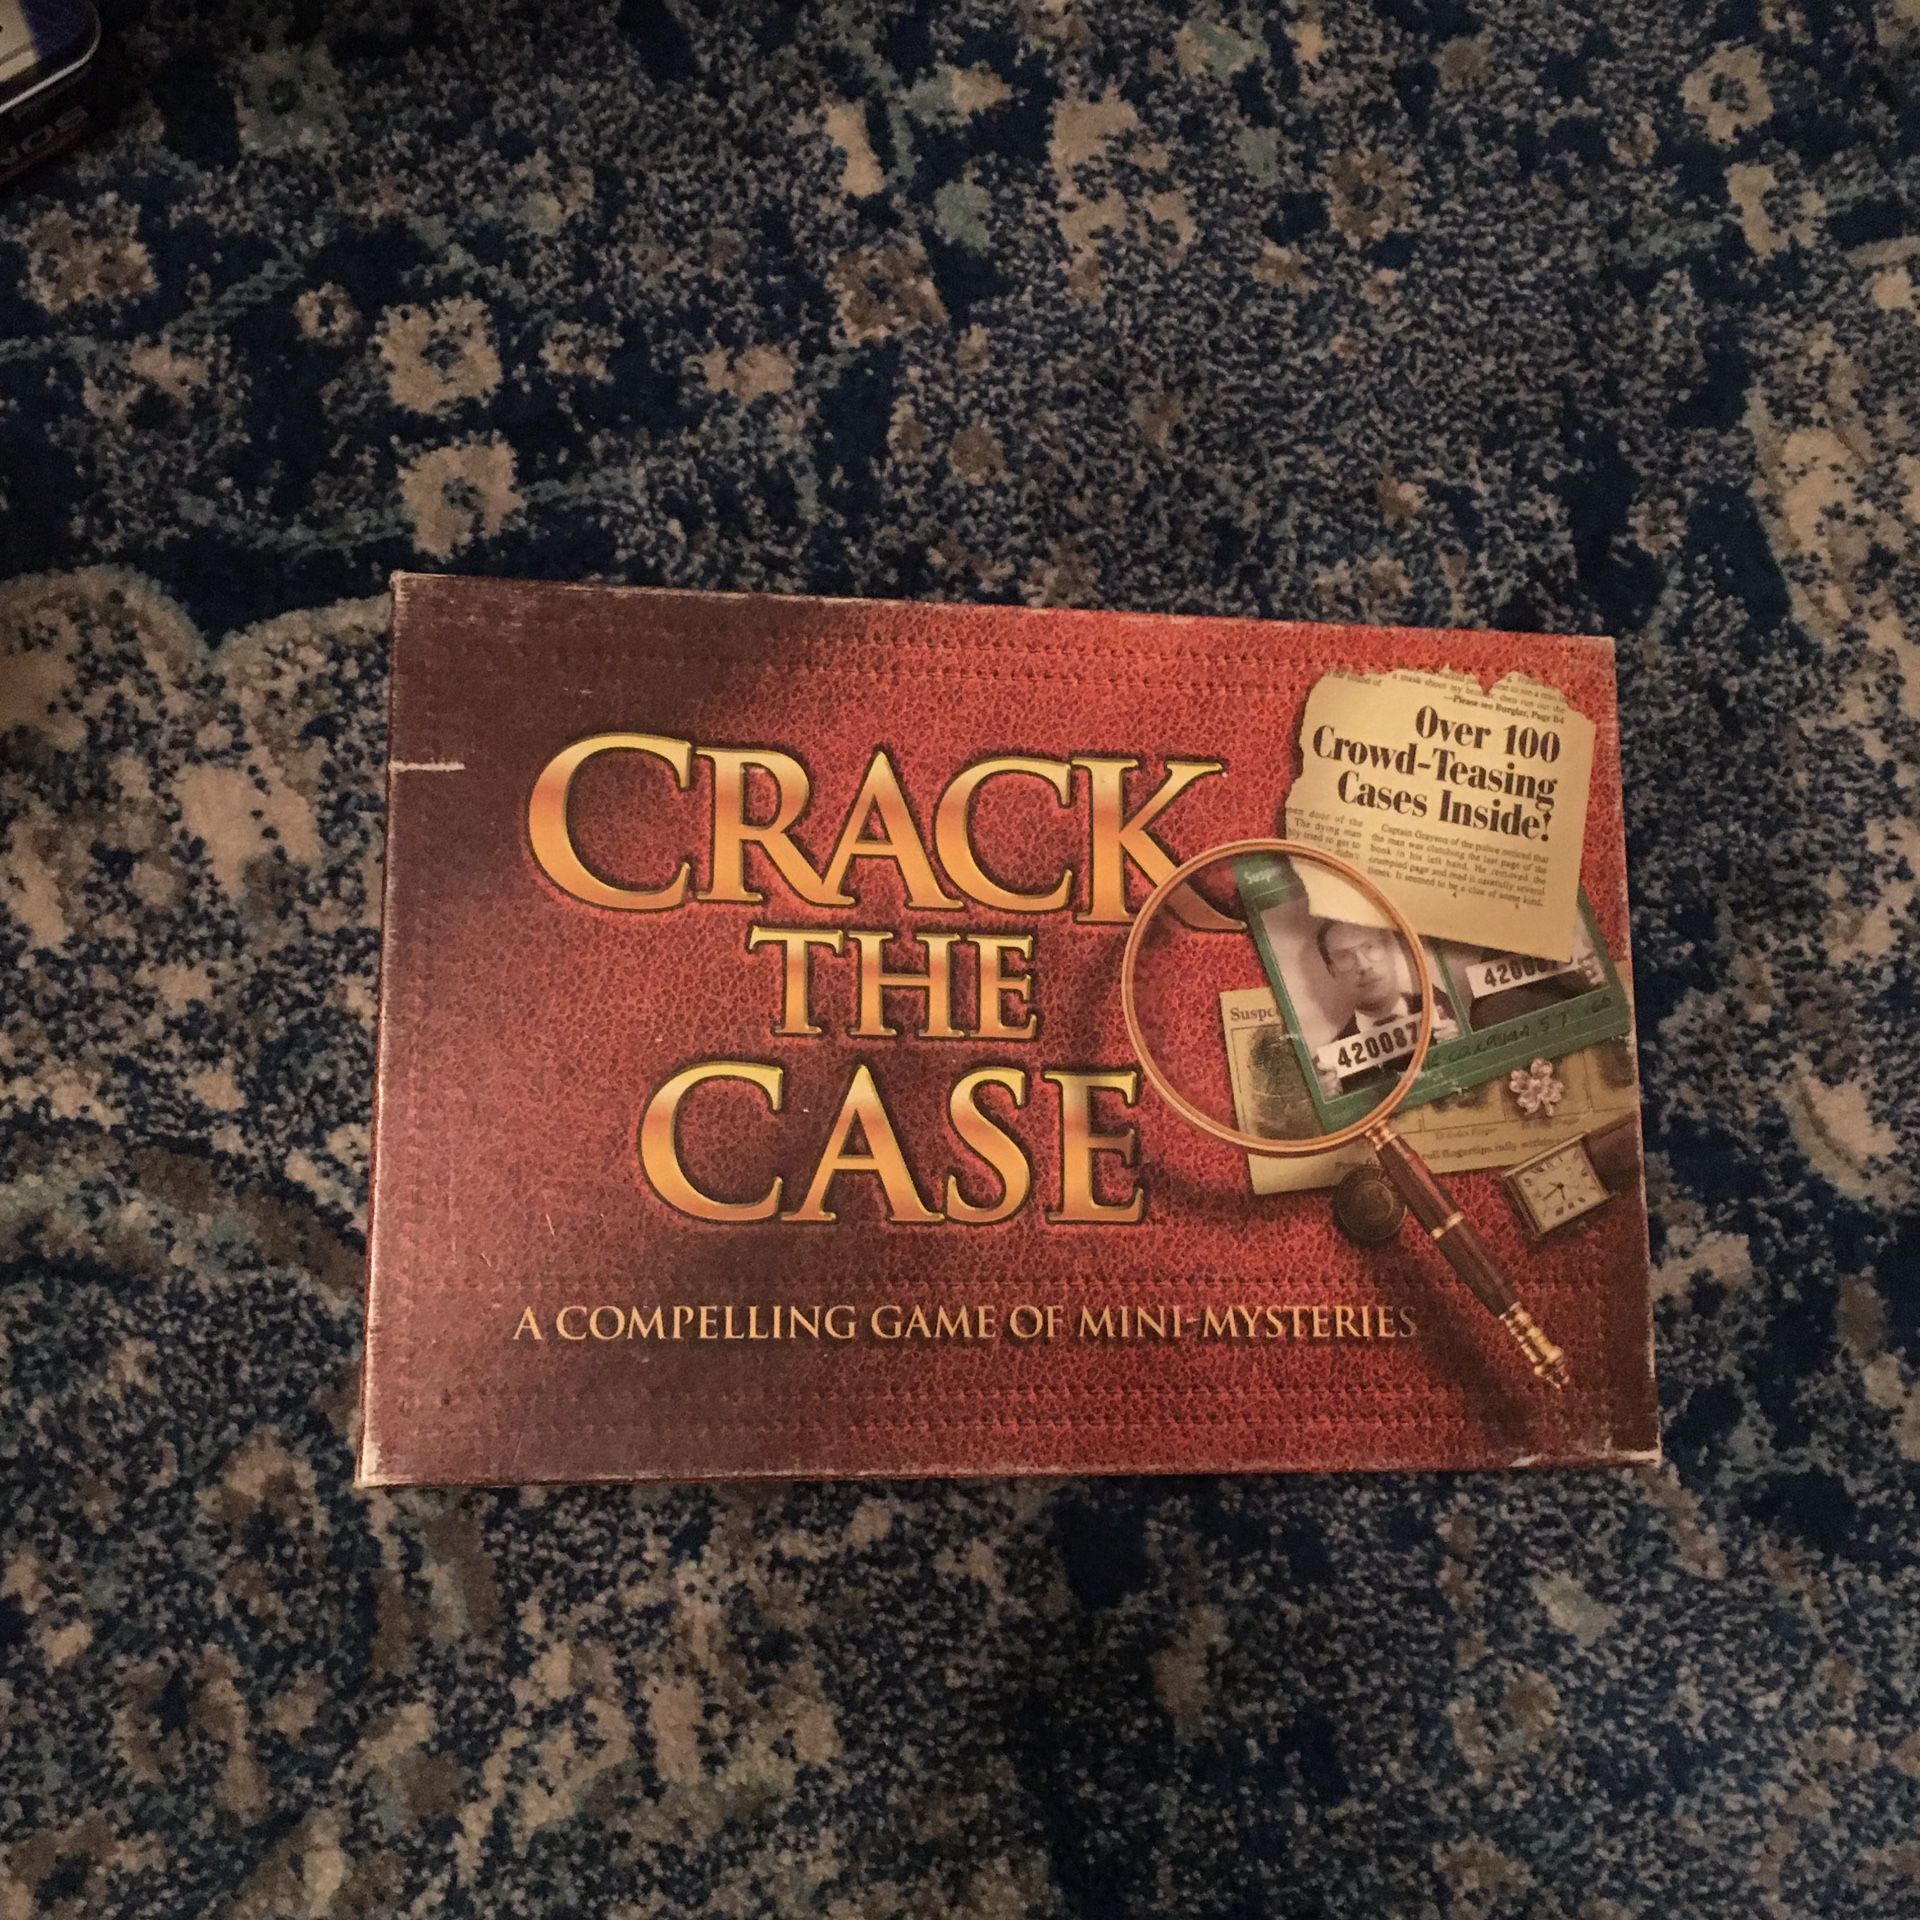 Crack the case game